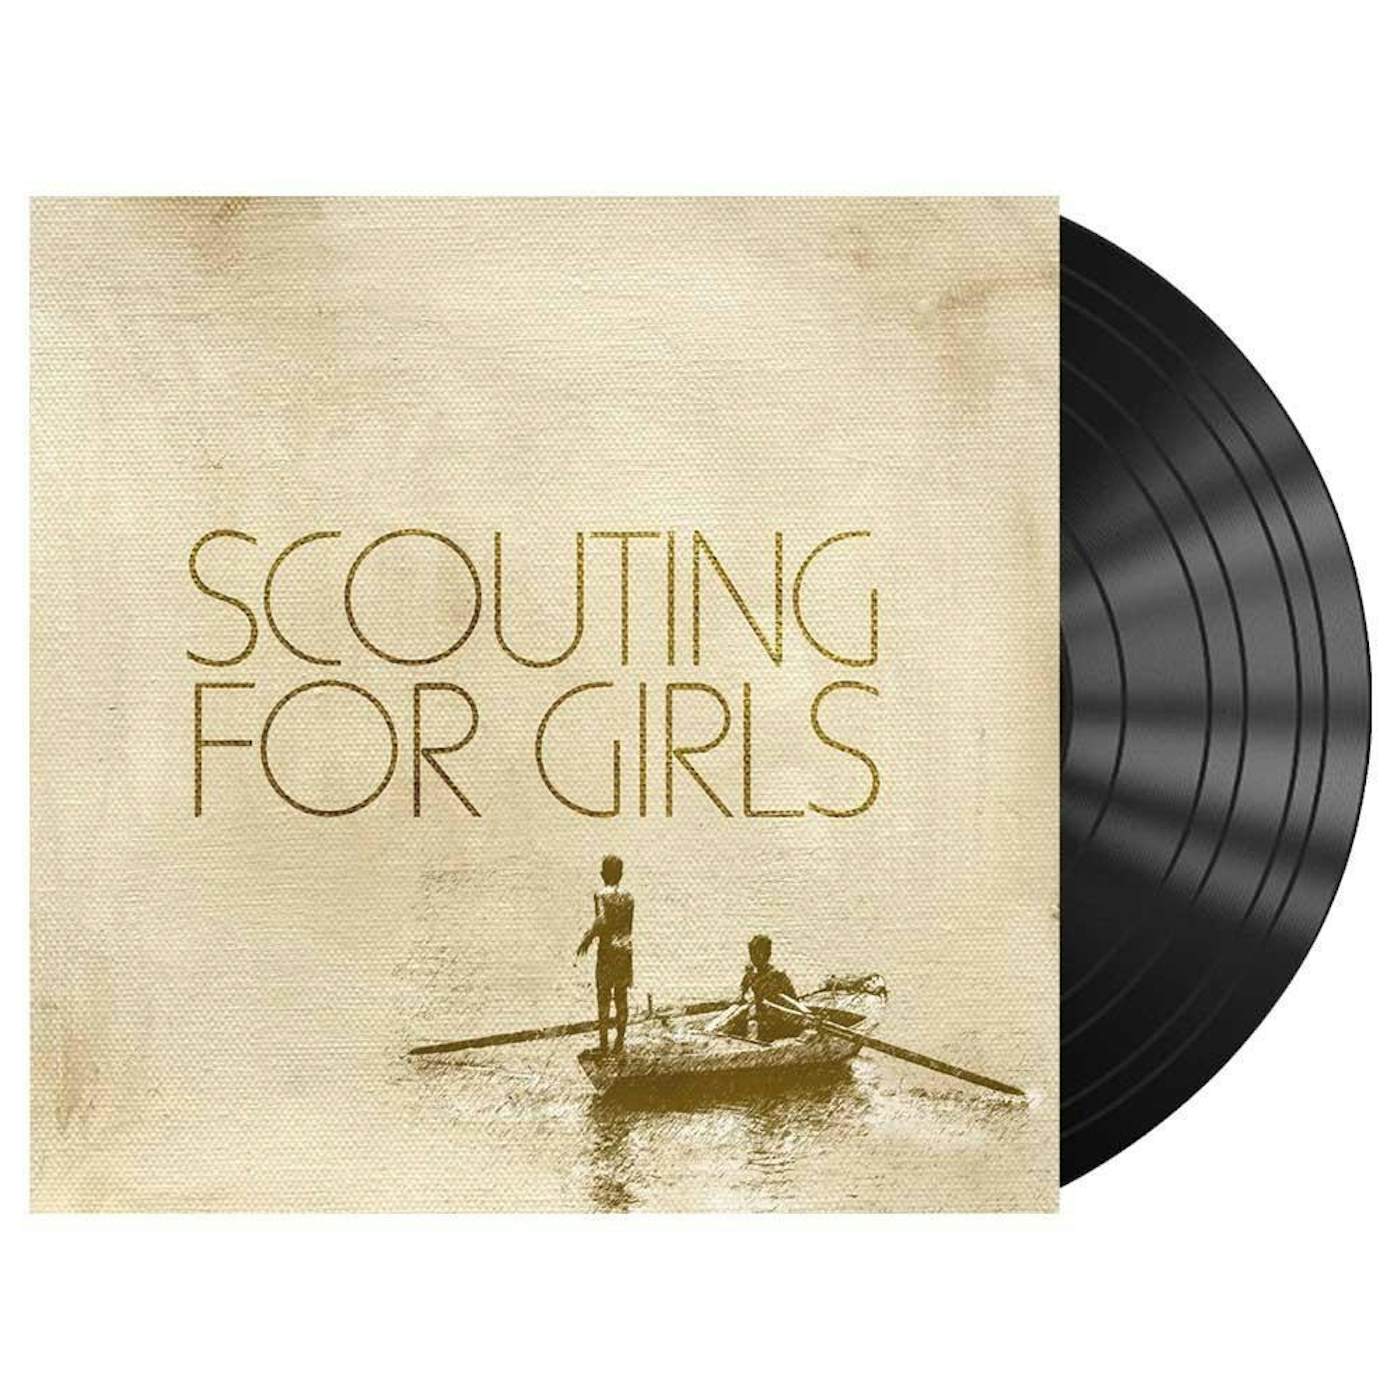 Scouting For Girls LP (Vinyl)